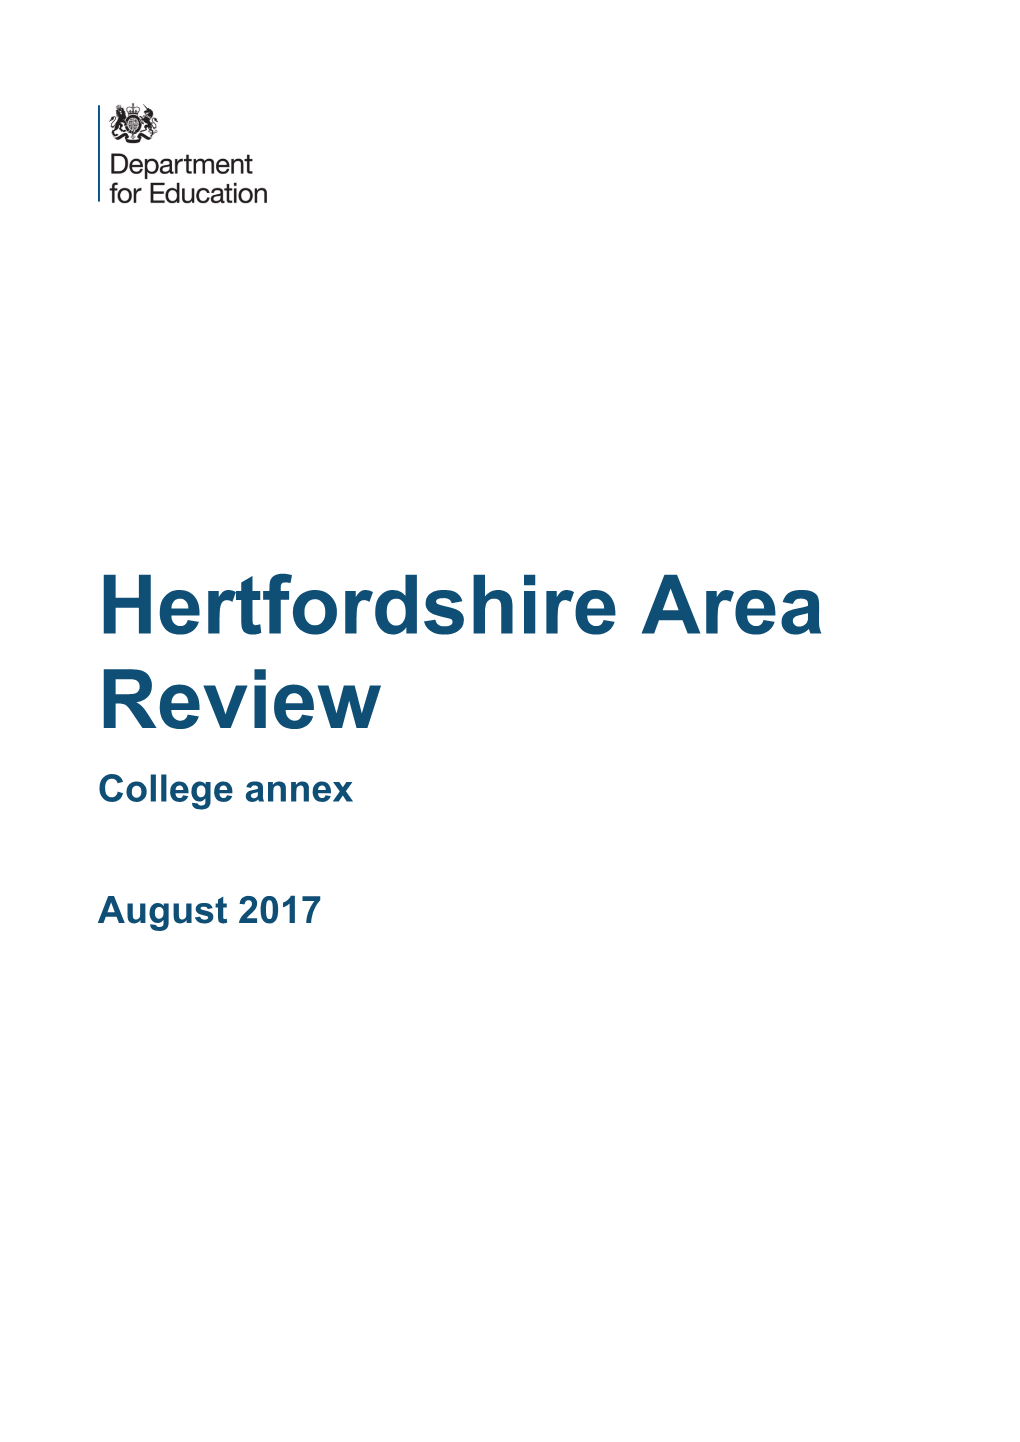 Hertfordshire Area Review: College Annex